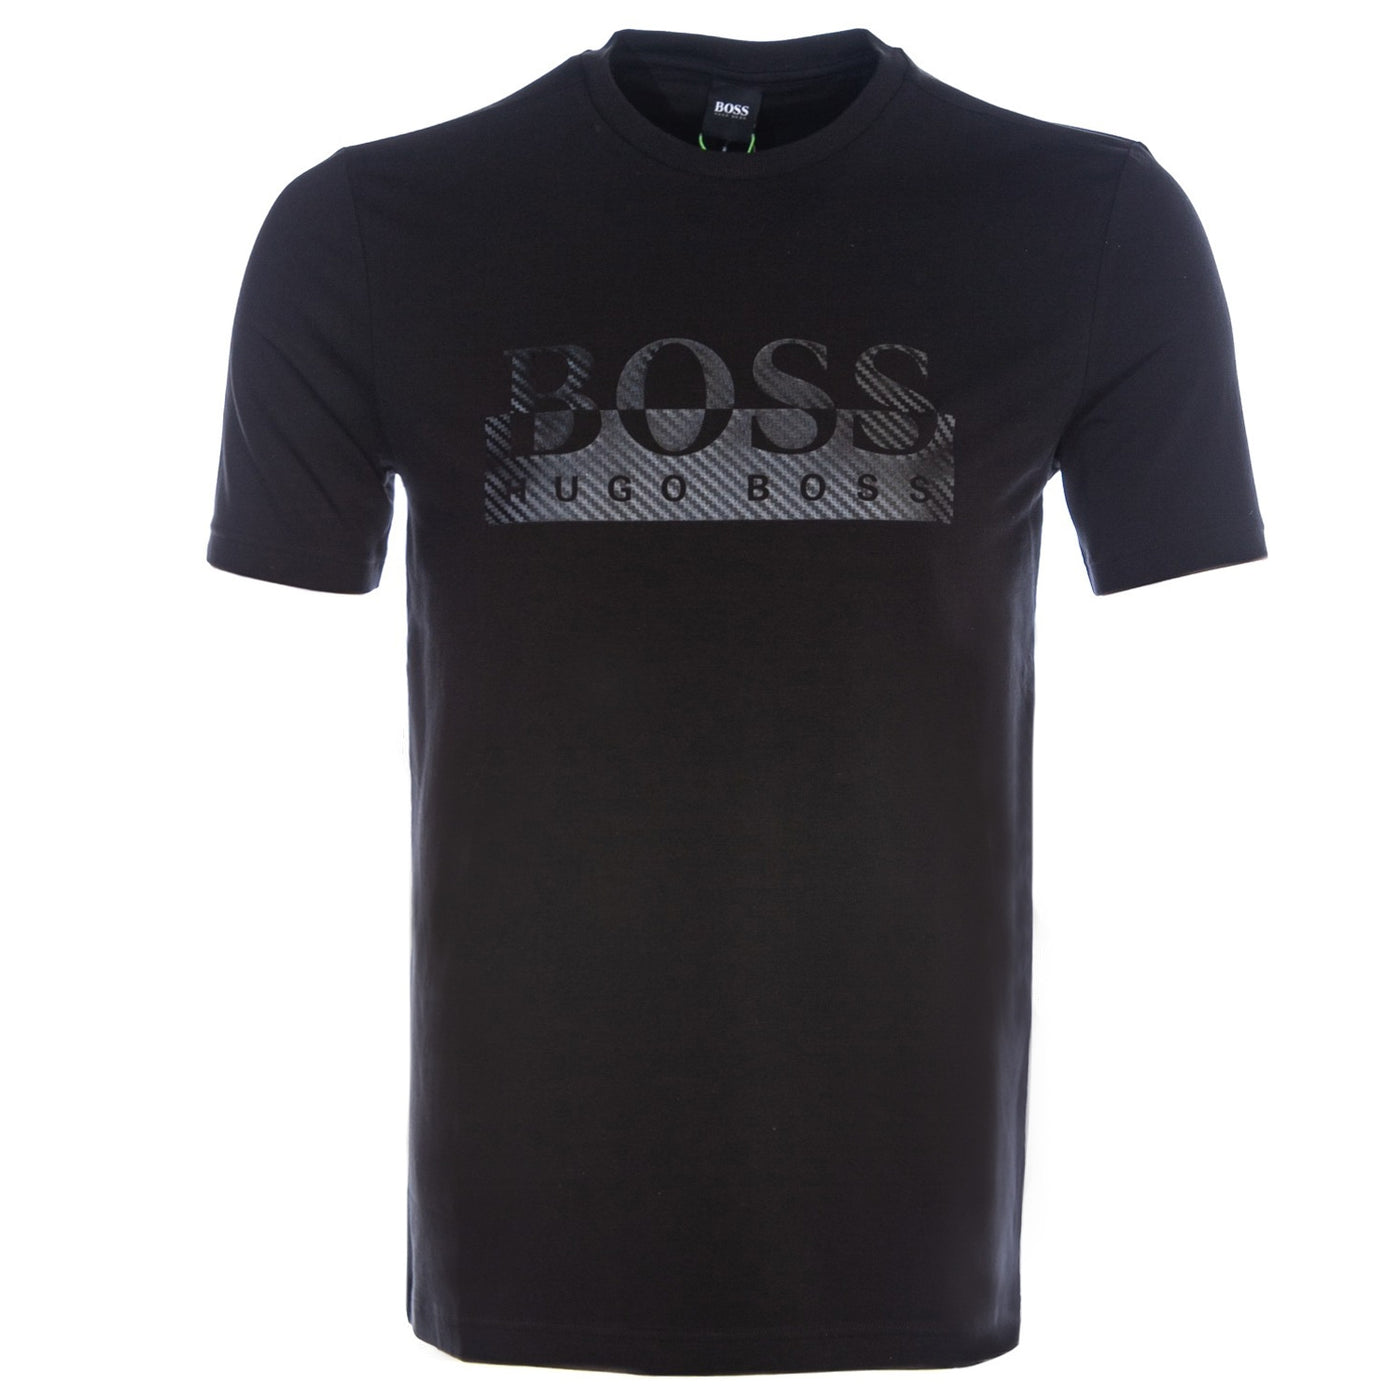 BOSS Tee 4 T Shirt in Black